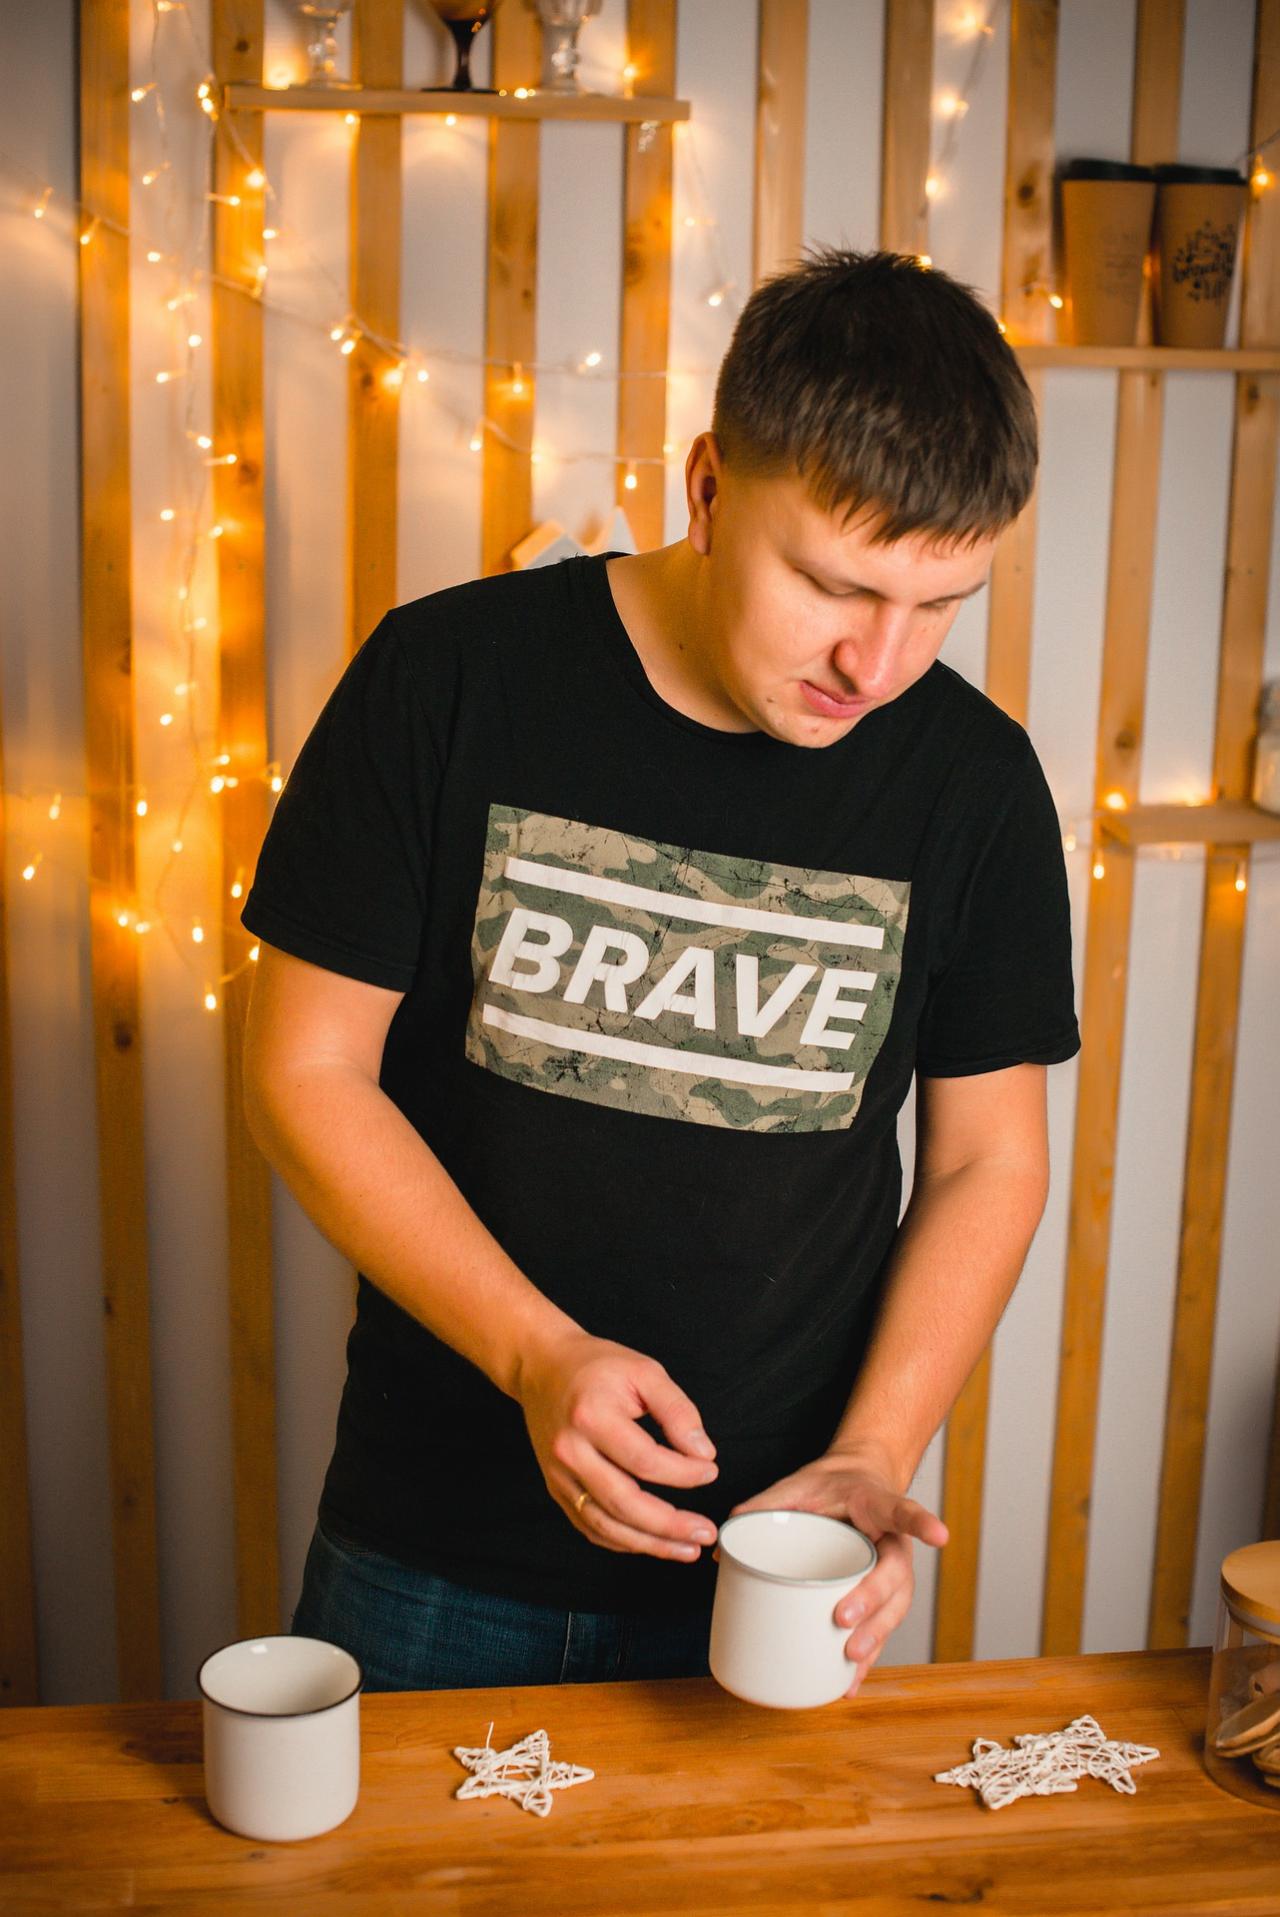 Young man preparing coffee